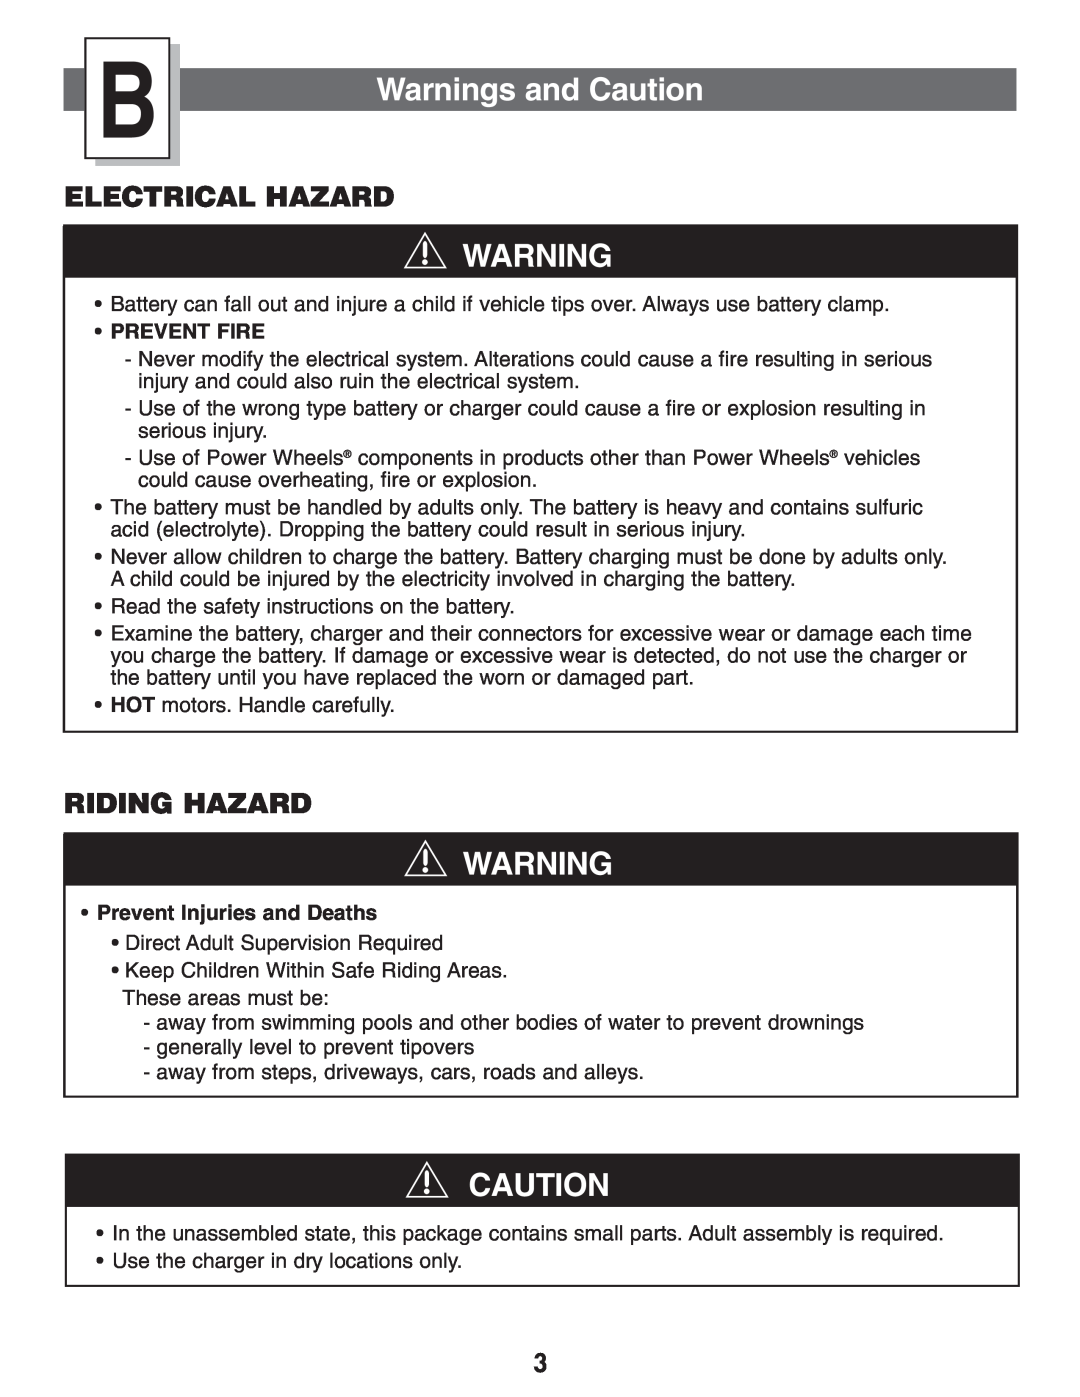 Kawasaki B9272 owner manual Warnings and Caution, Electrical Hazard, Riding Hazard 